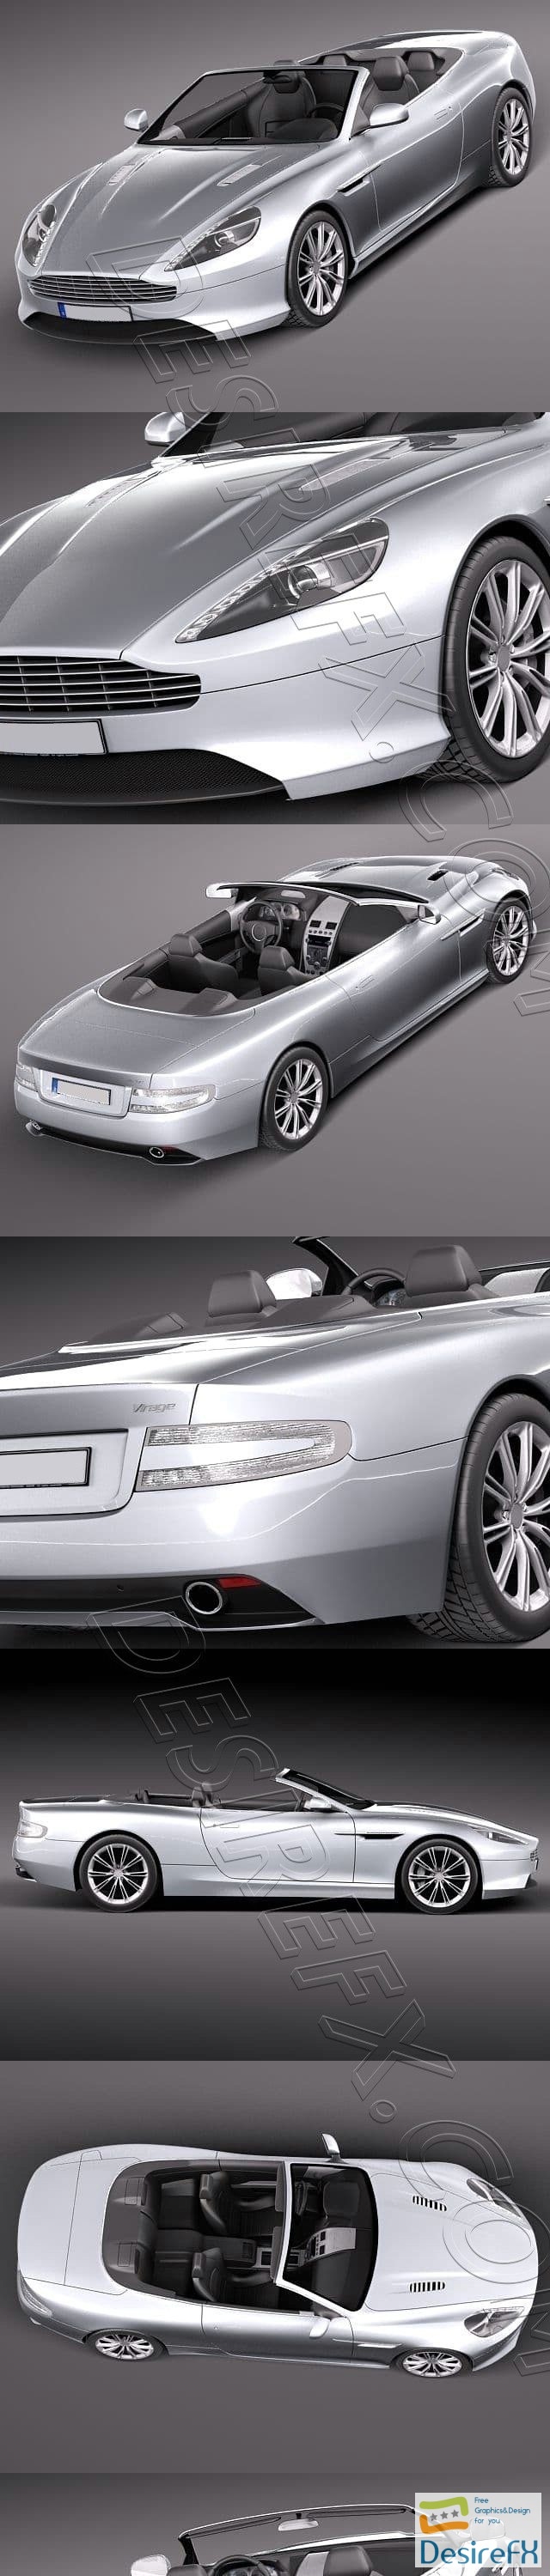 Aston Martin Virage Volante 2012 3D Model